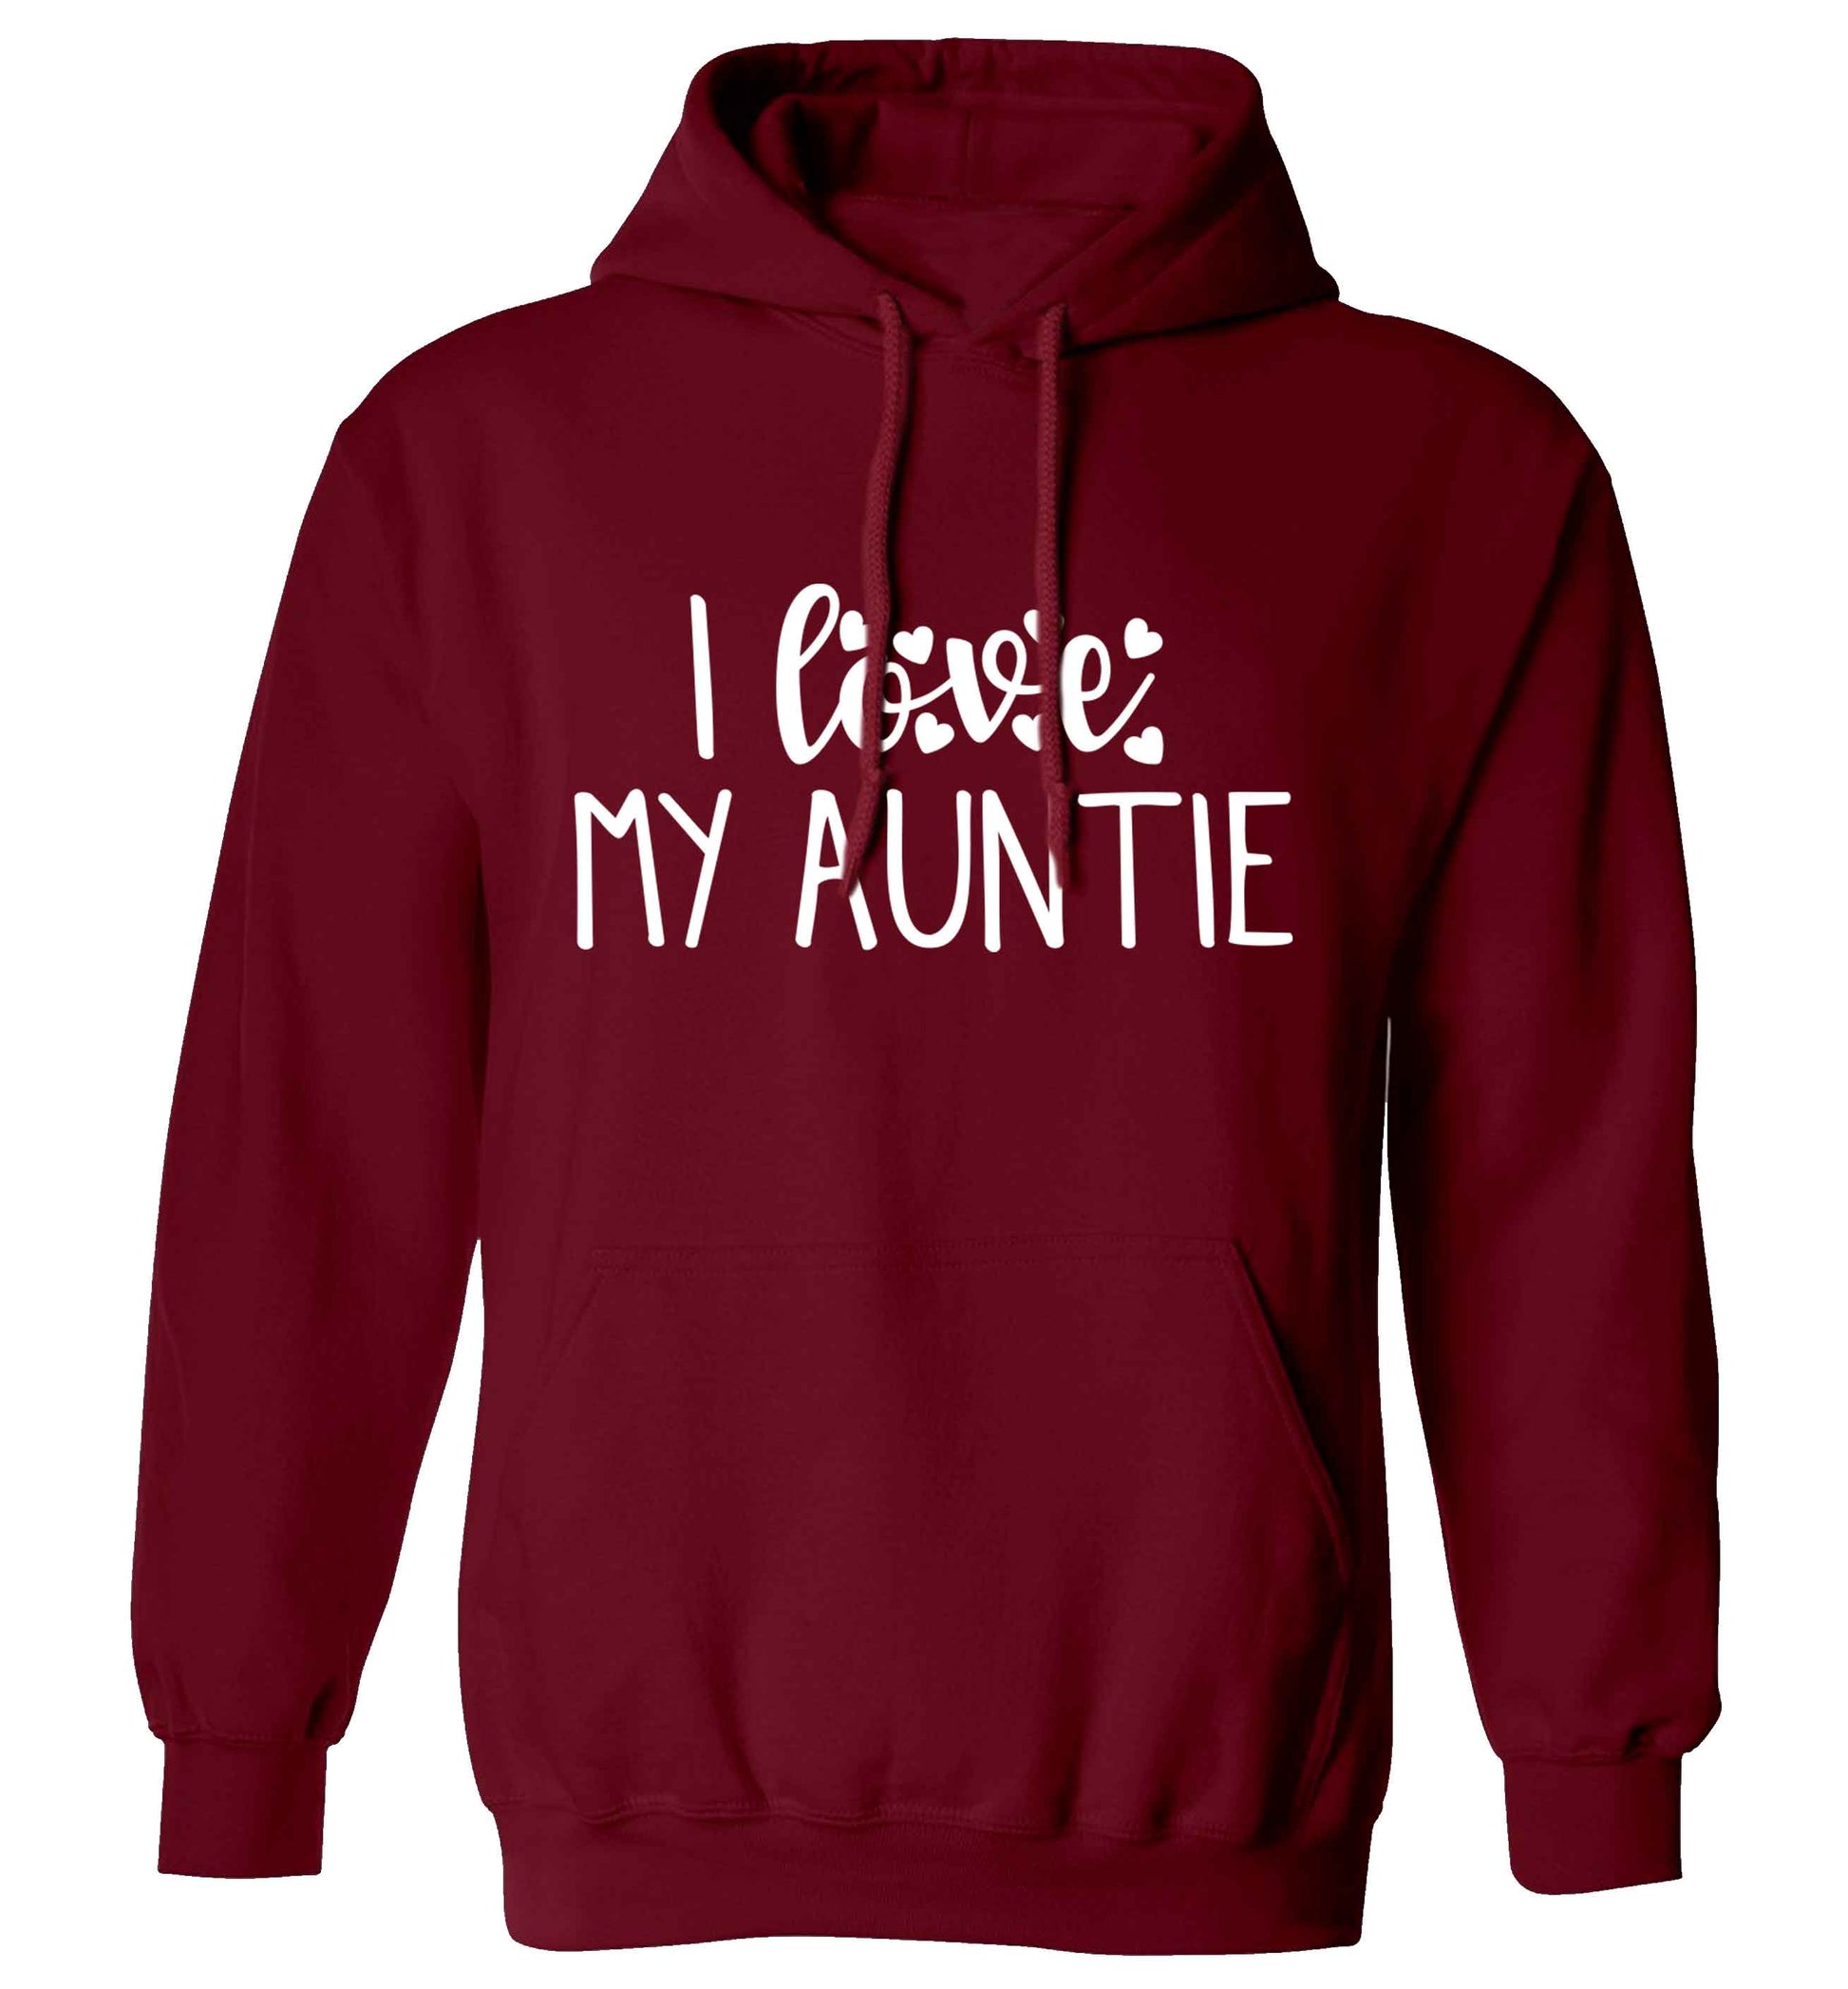 I love my auntie adults unisex maroon hoodie 2XL